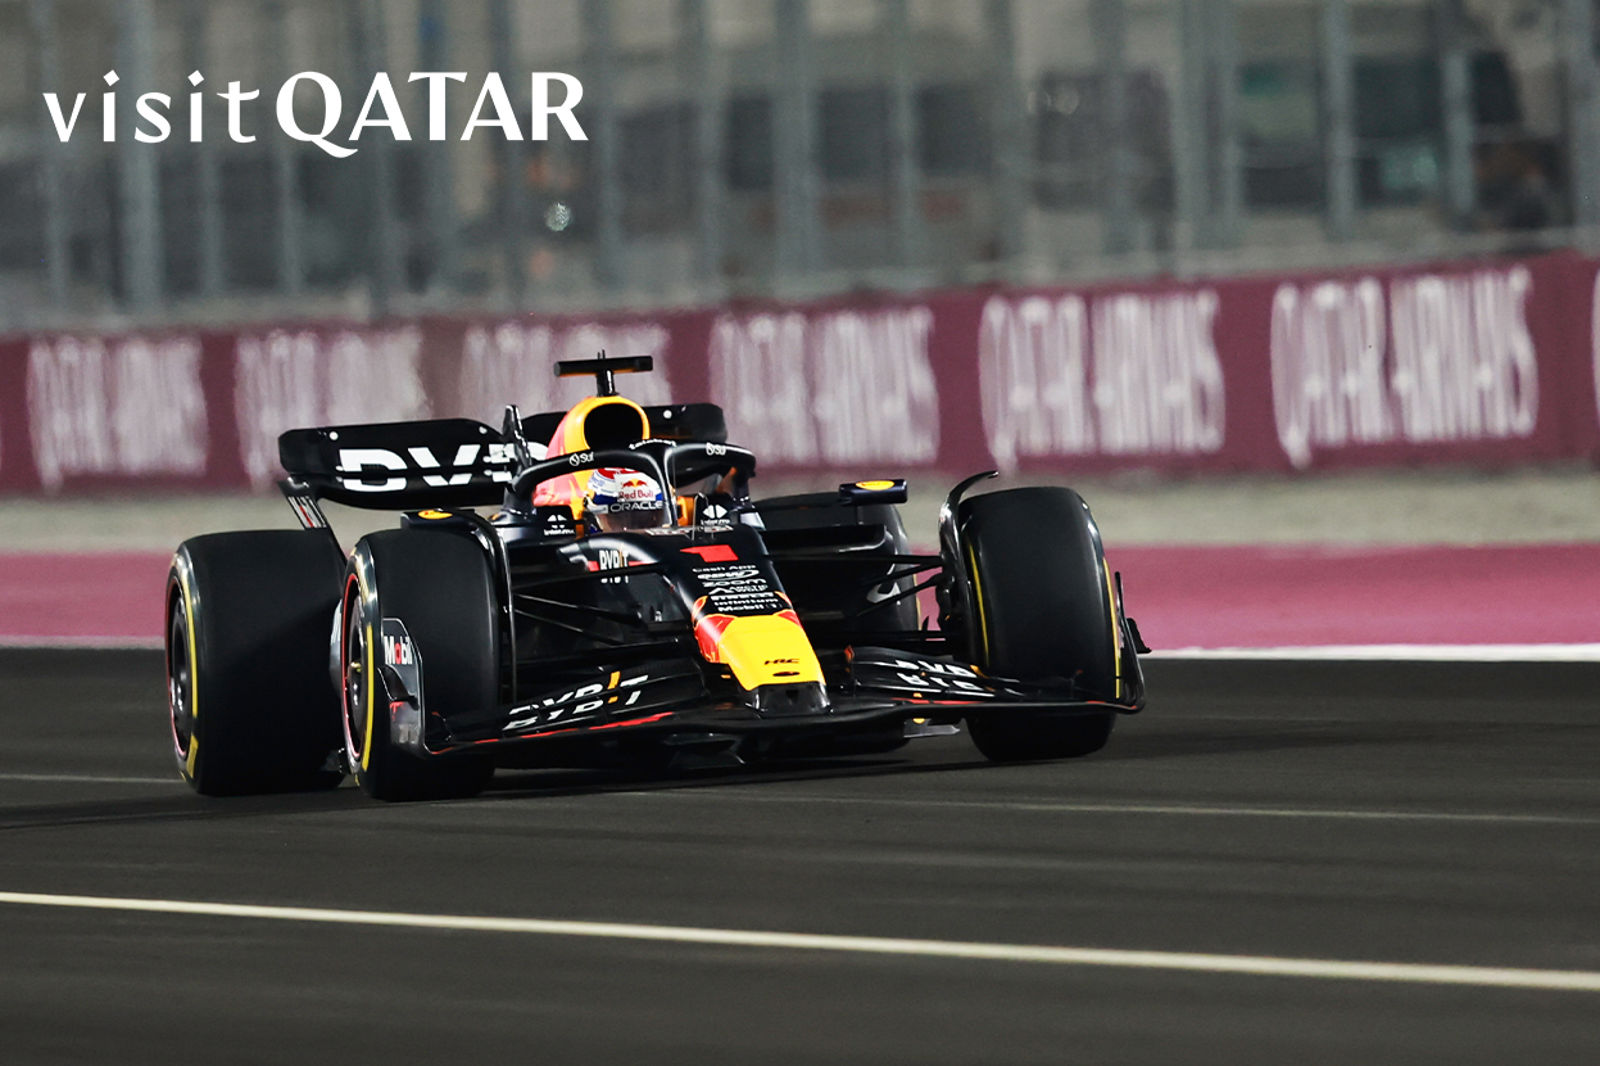 Combinatiereis F1 Qatar&F1 Abu Dhabi, 11 dagen